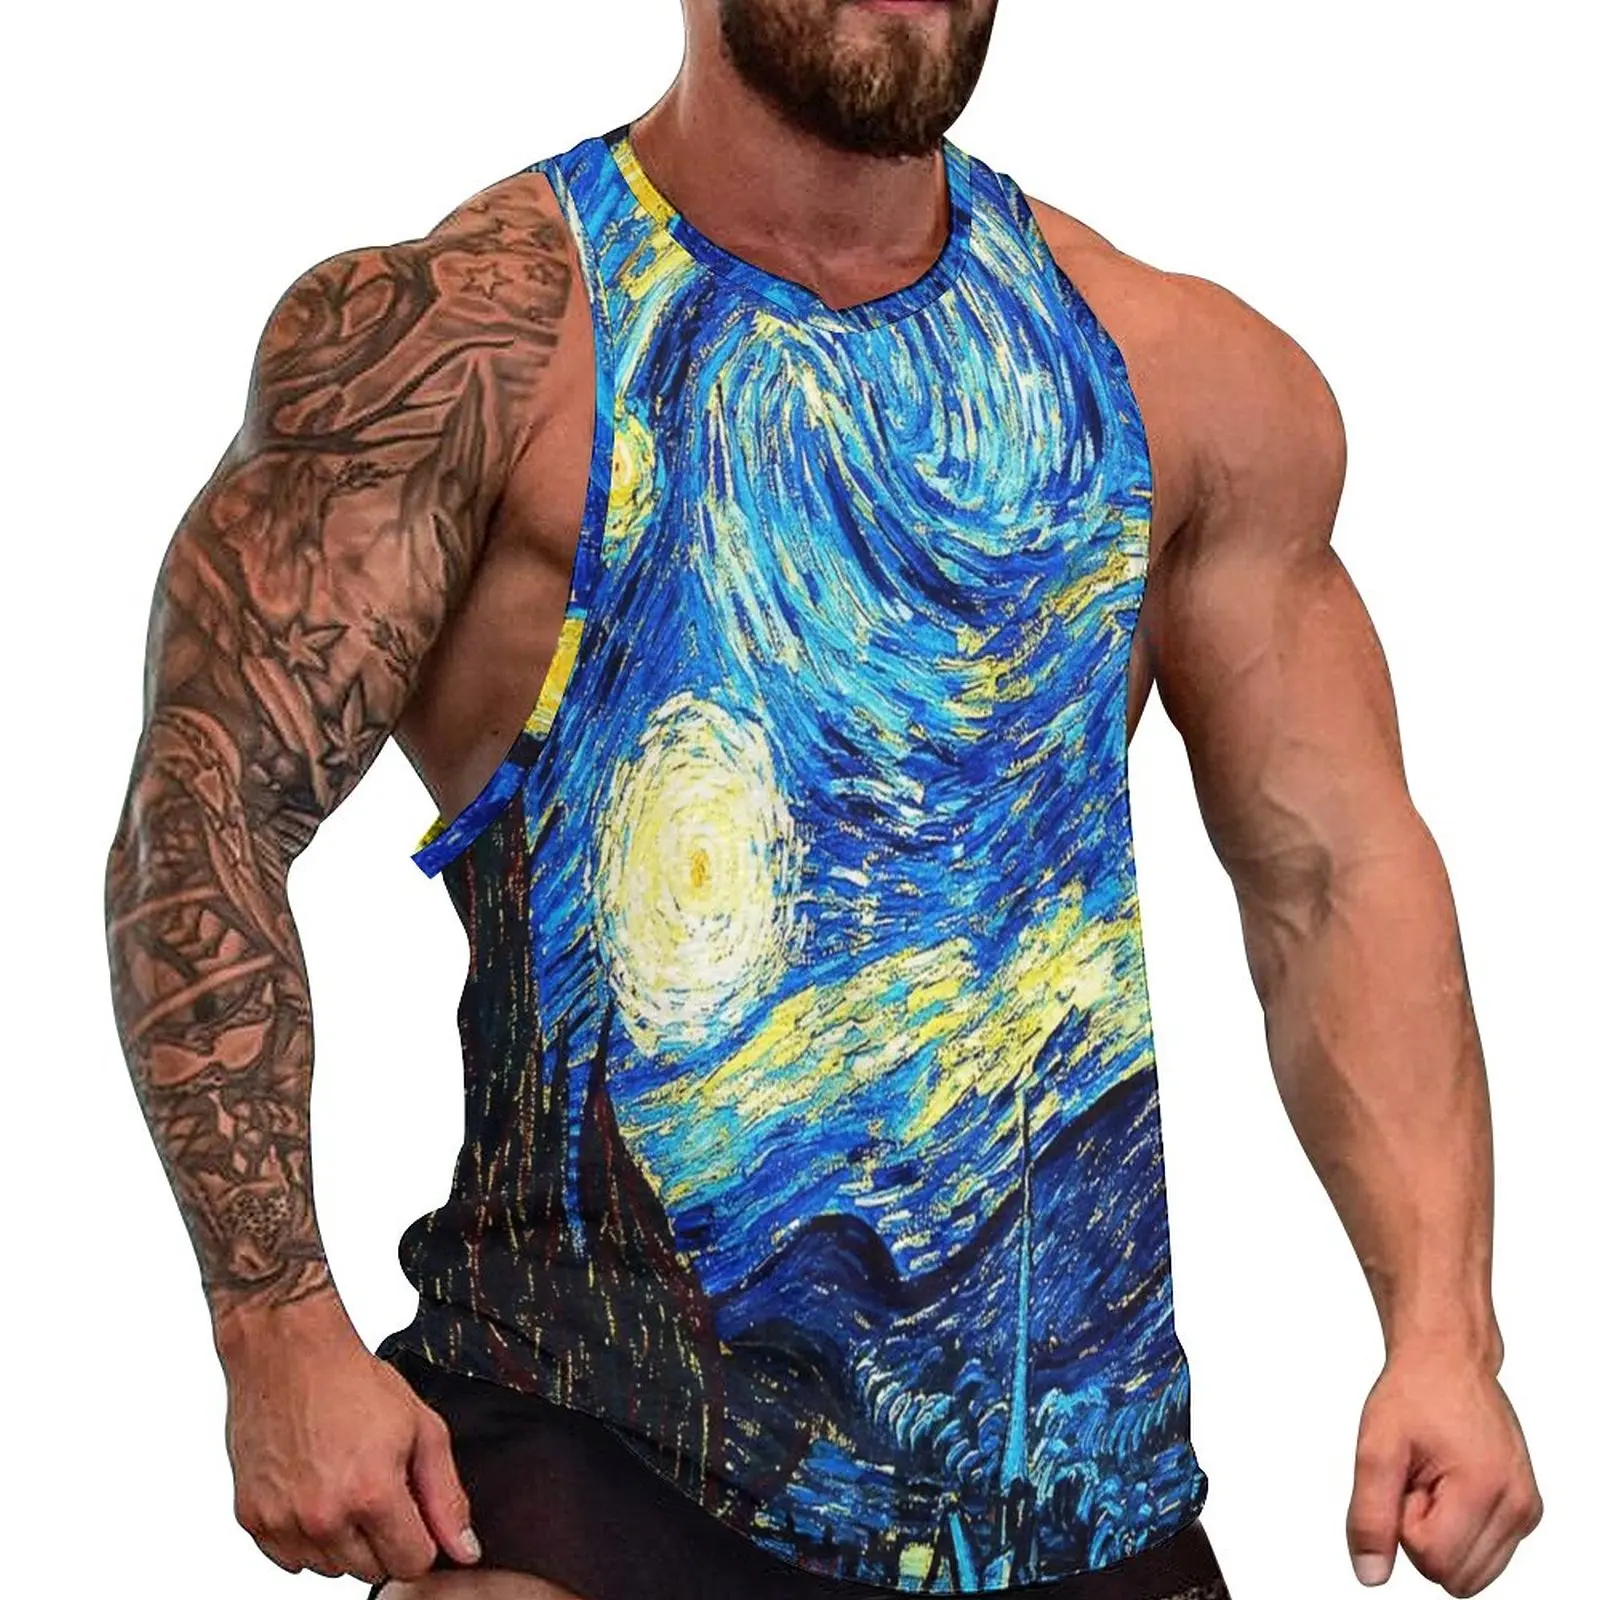 

Starry Night Tank Top Men Vincent Van Gogh Cool Tops Beach Bodybuilding Design Sleeveless Shirts Big Size 4XL 5XL